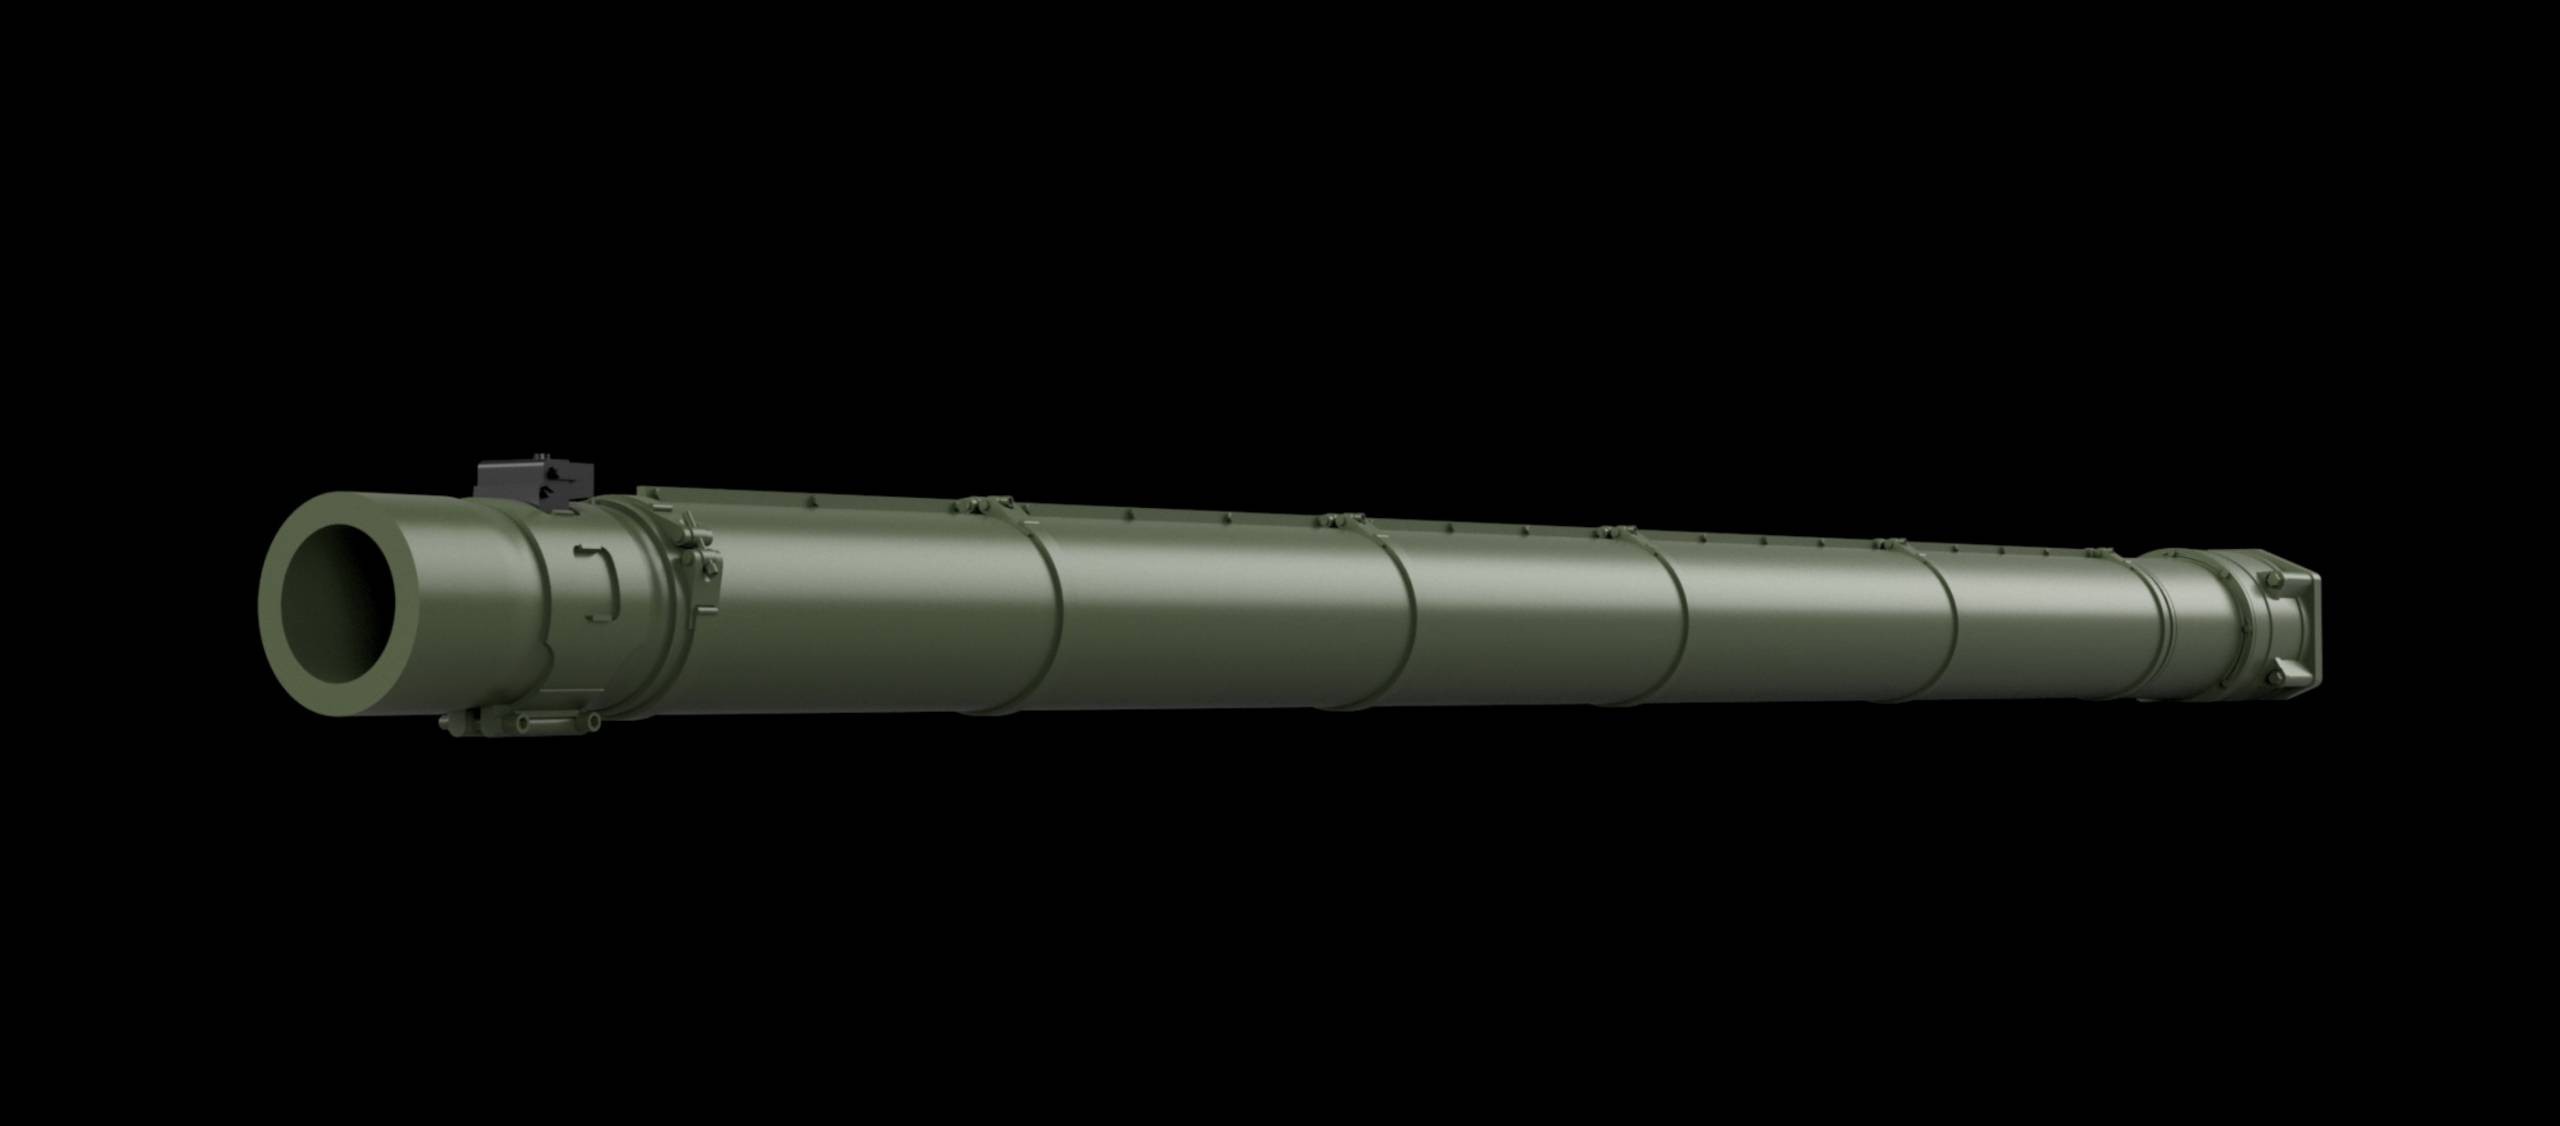 GB35-105 2A82-1M1 Gun barrel for  M14 “Armata”